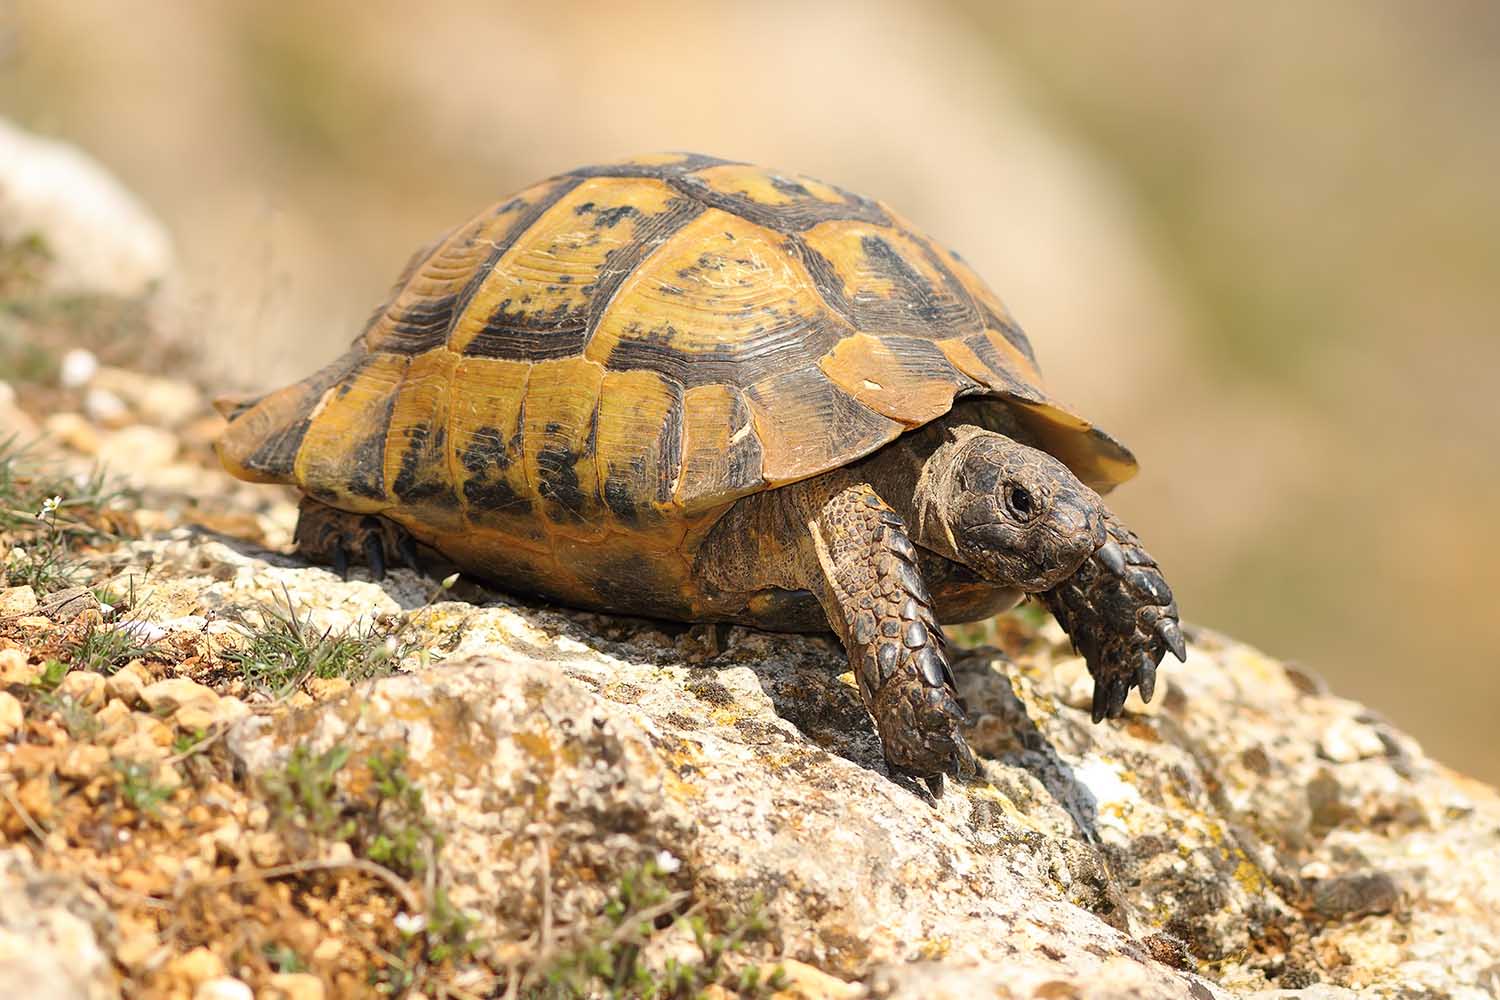 The Spur-thighed Tortoise, Testudo graeca basking foraging in full sunlight, Romania